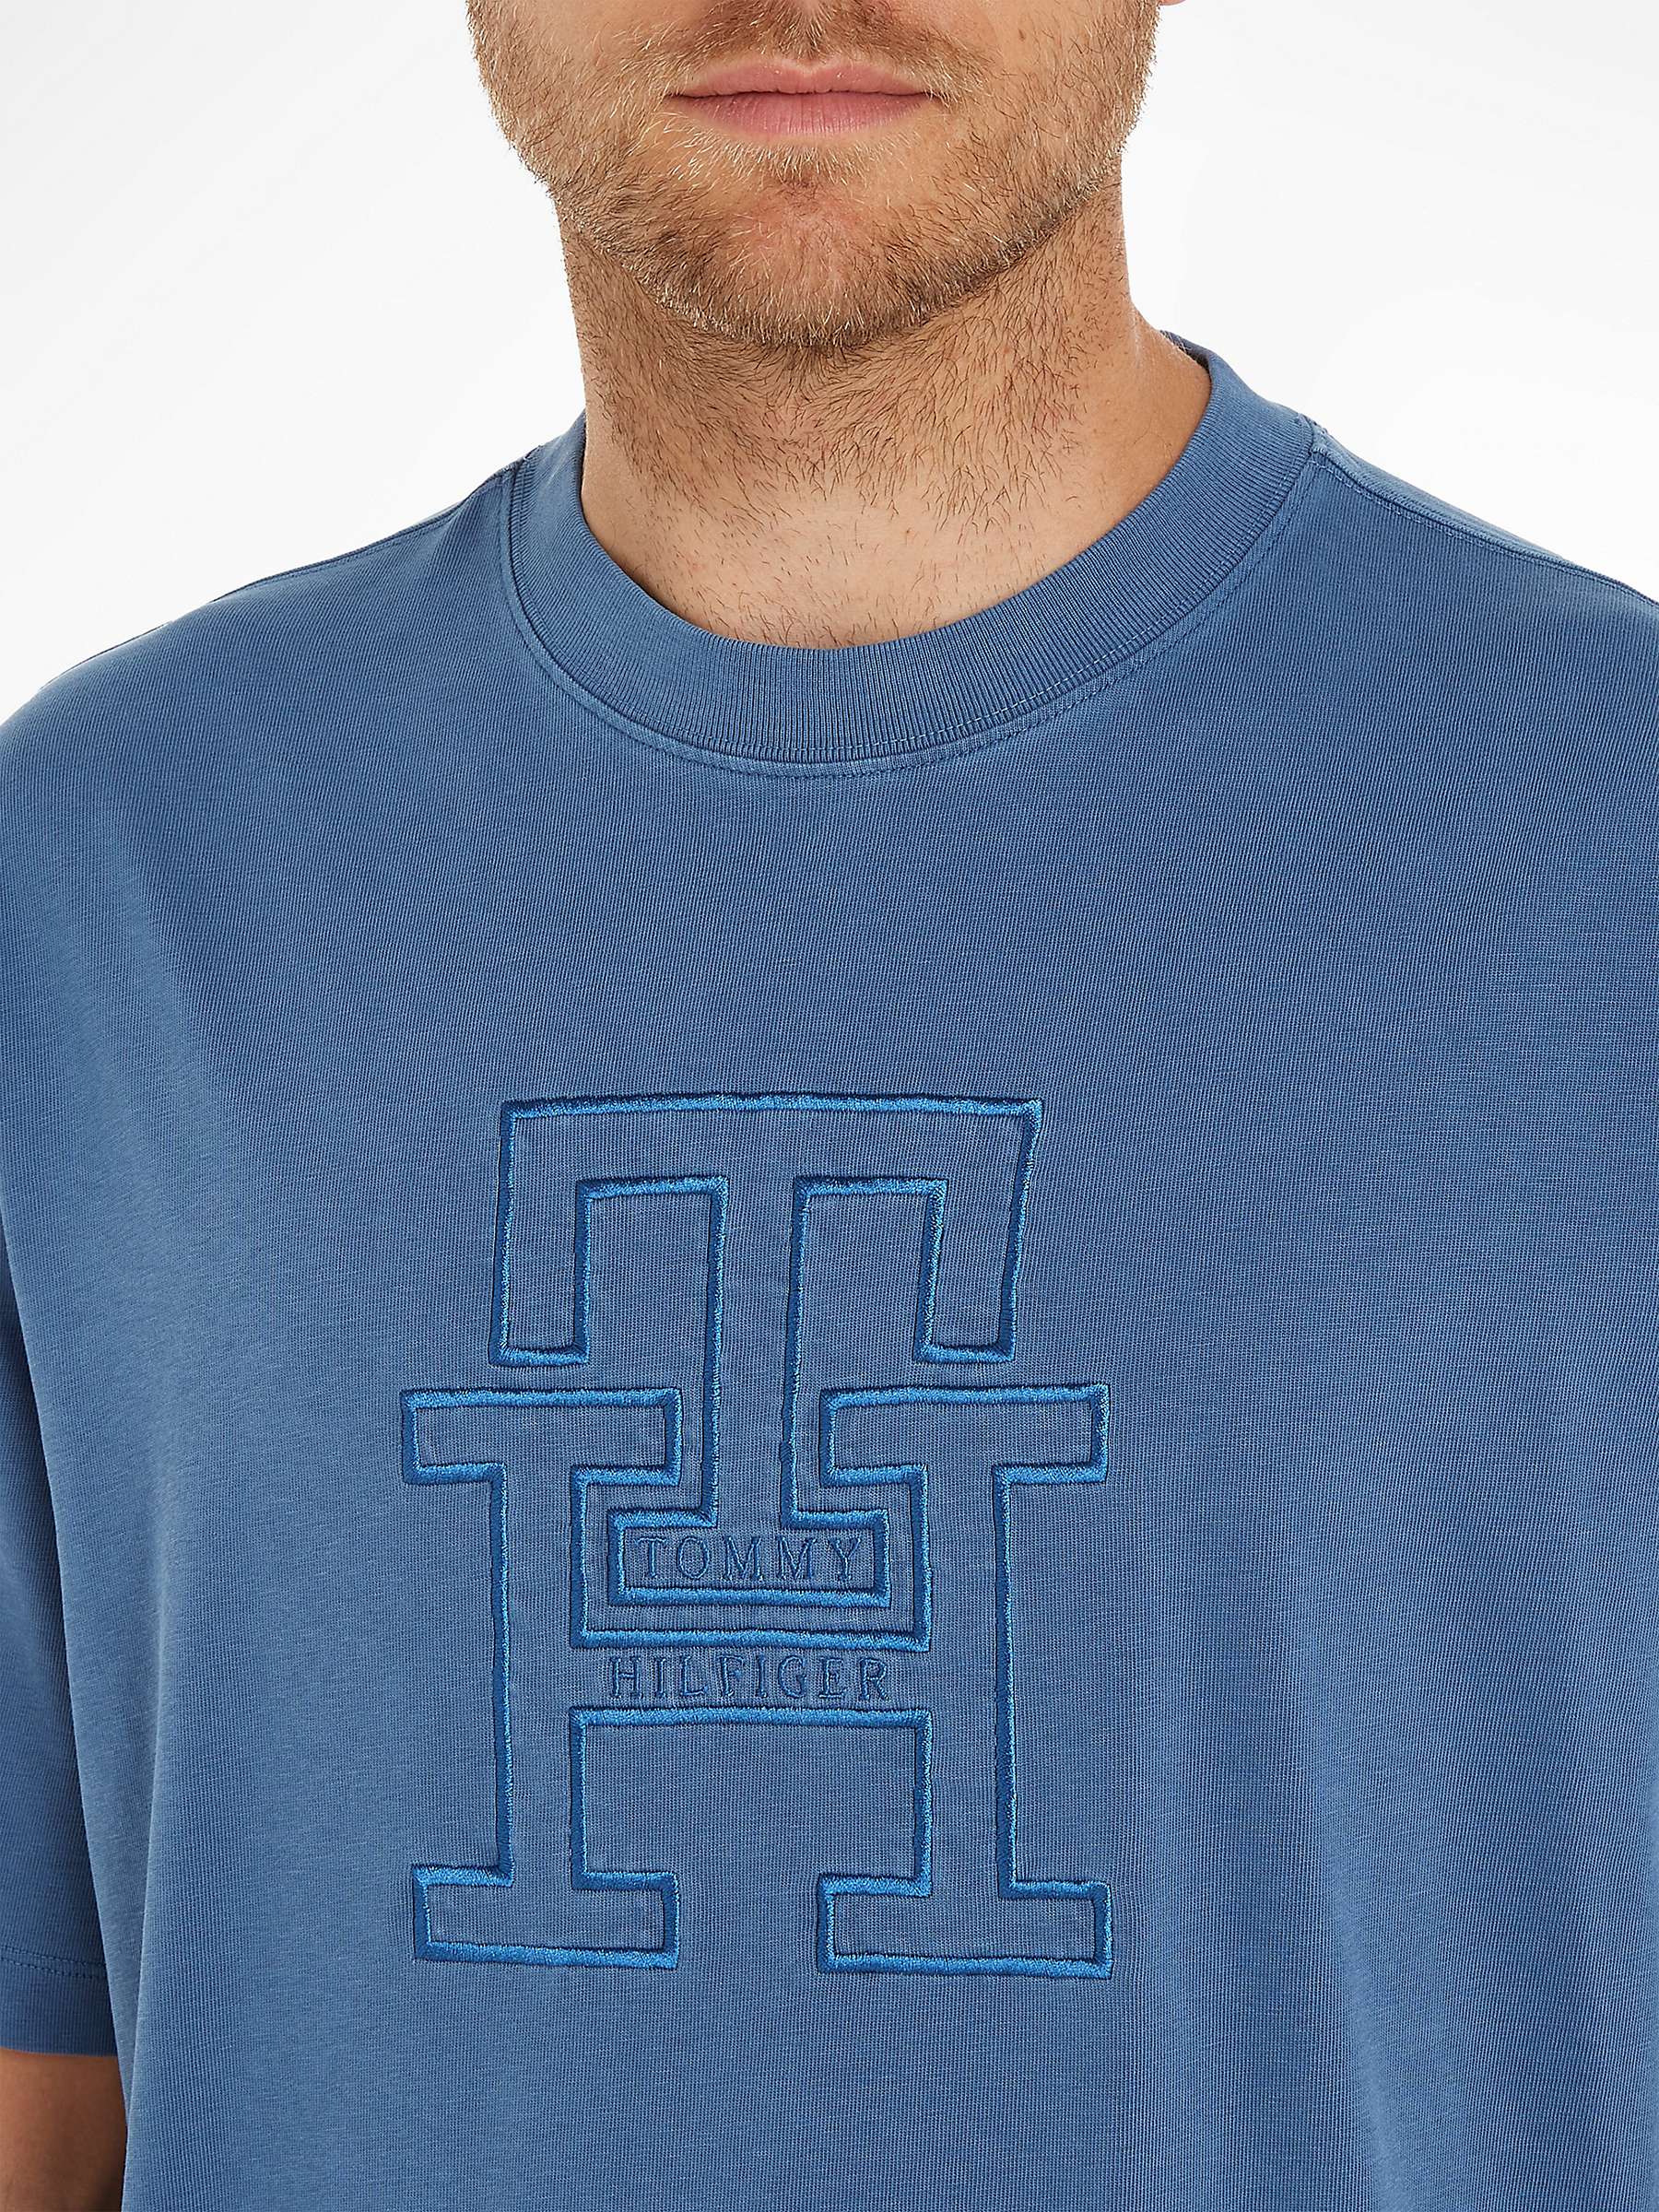 Buy Tommy Hilfiger Garment Dyed T-Shirt, Blue Coast Online at johnlewis.com